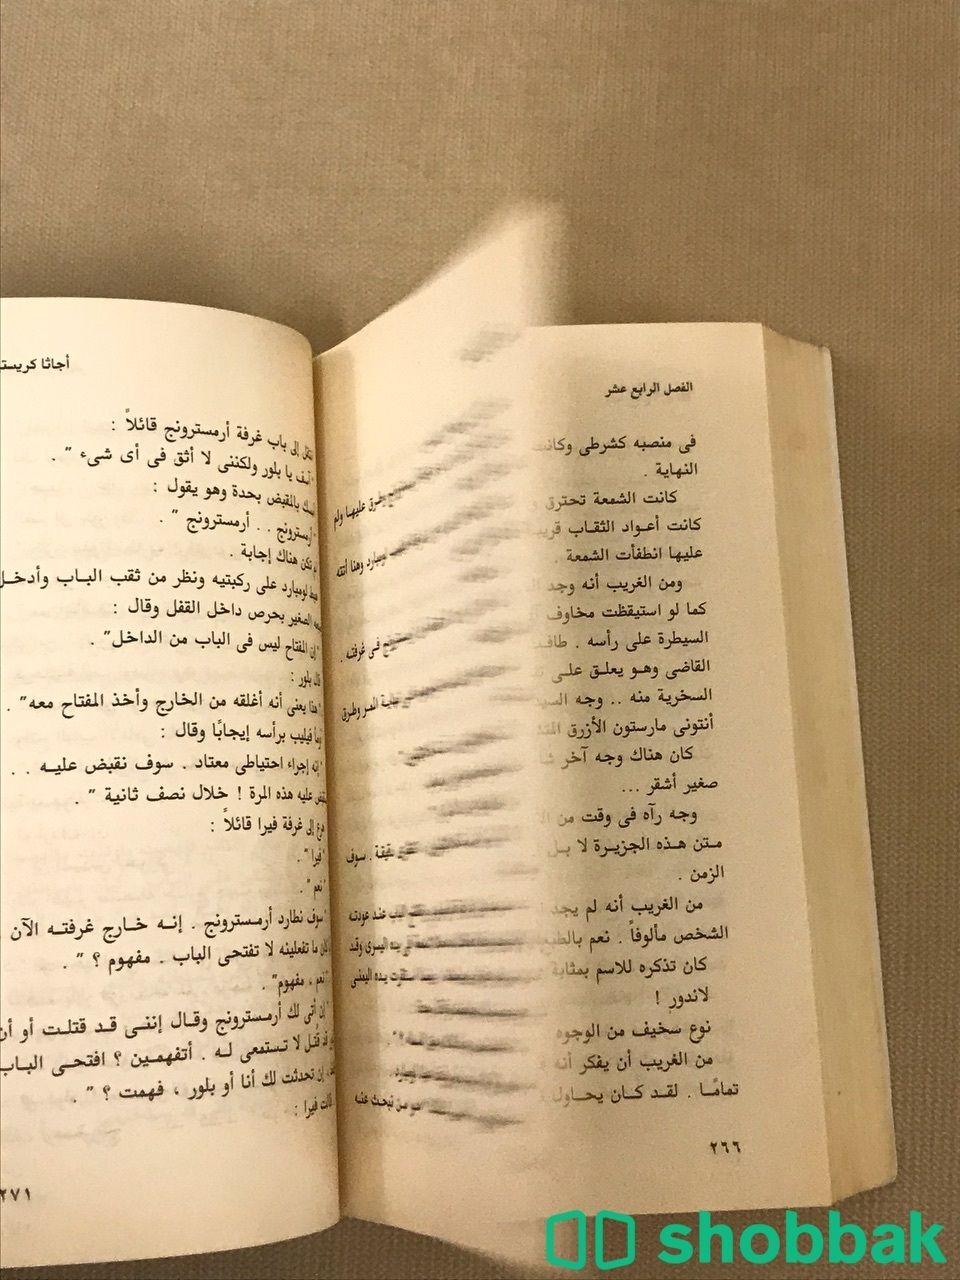 كتاب واختفى كل شيء Shobbak Saudi Arabia